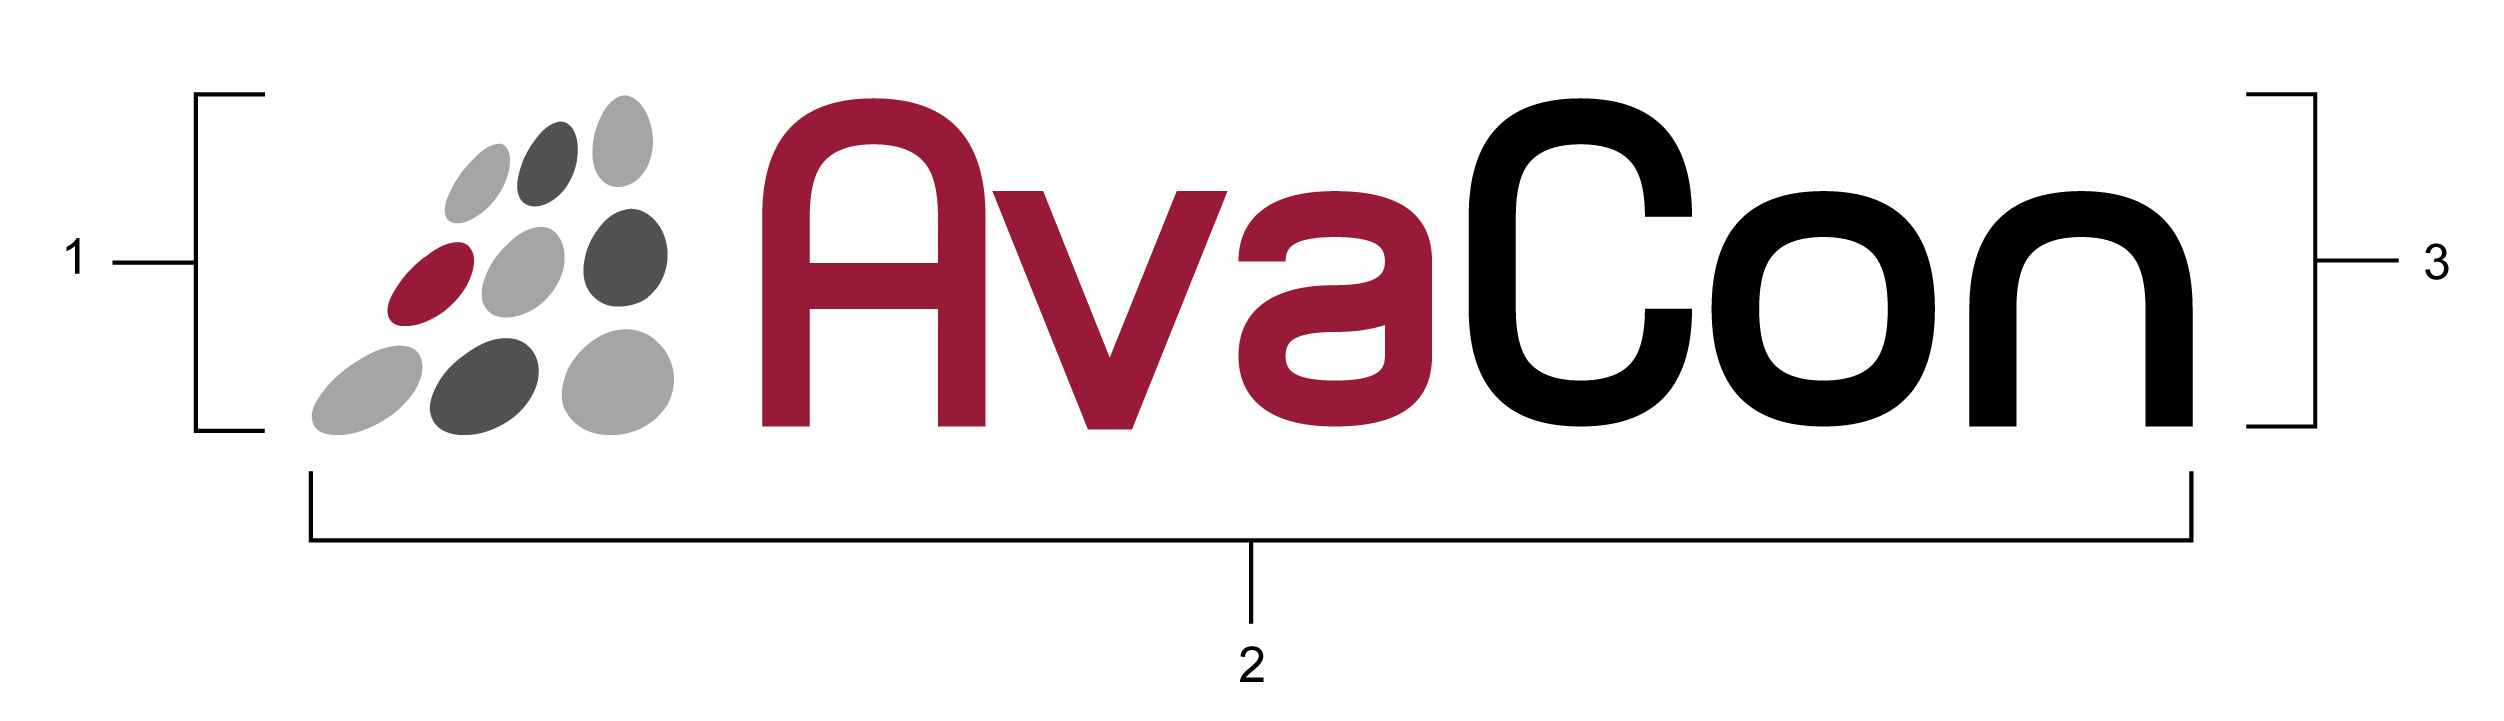 AvaCon_Logo_Structure.jpg